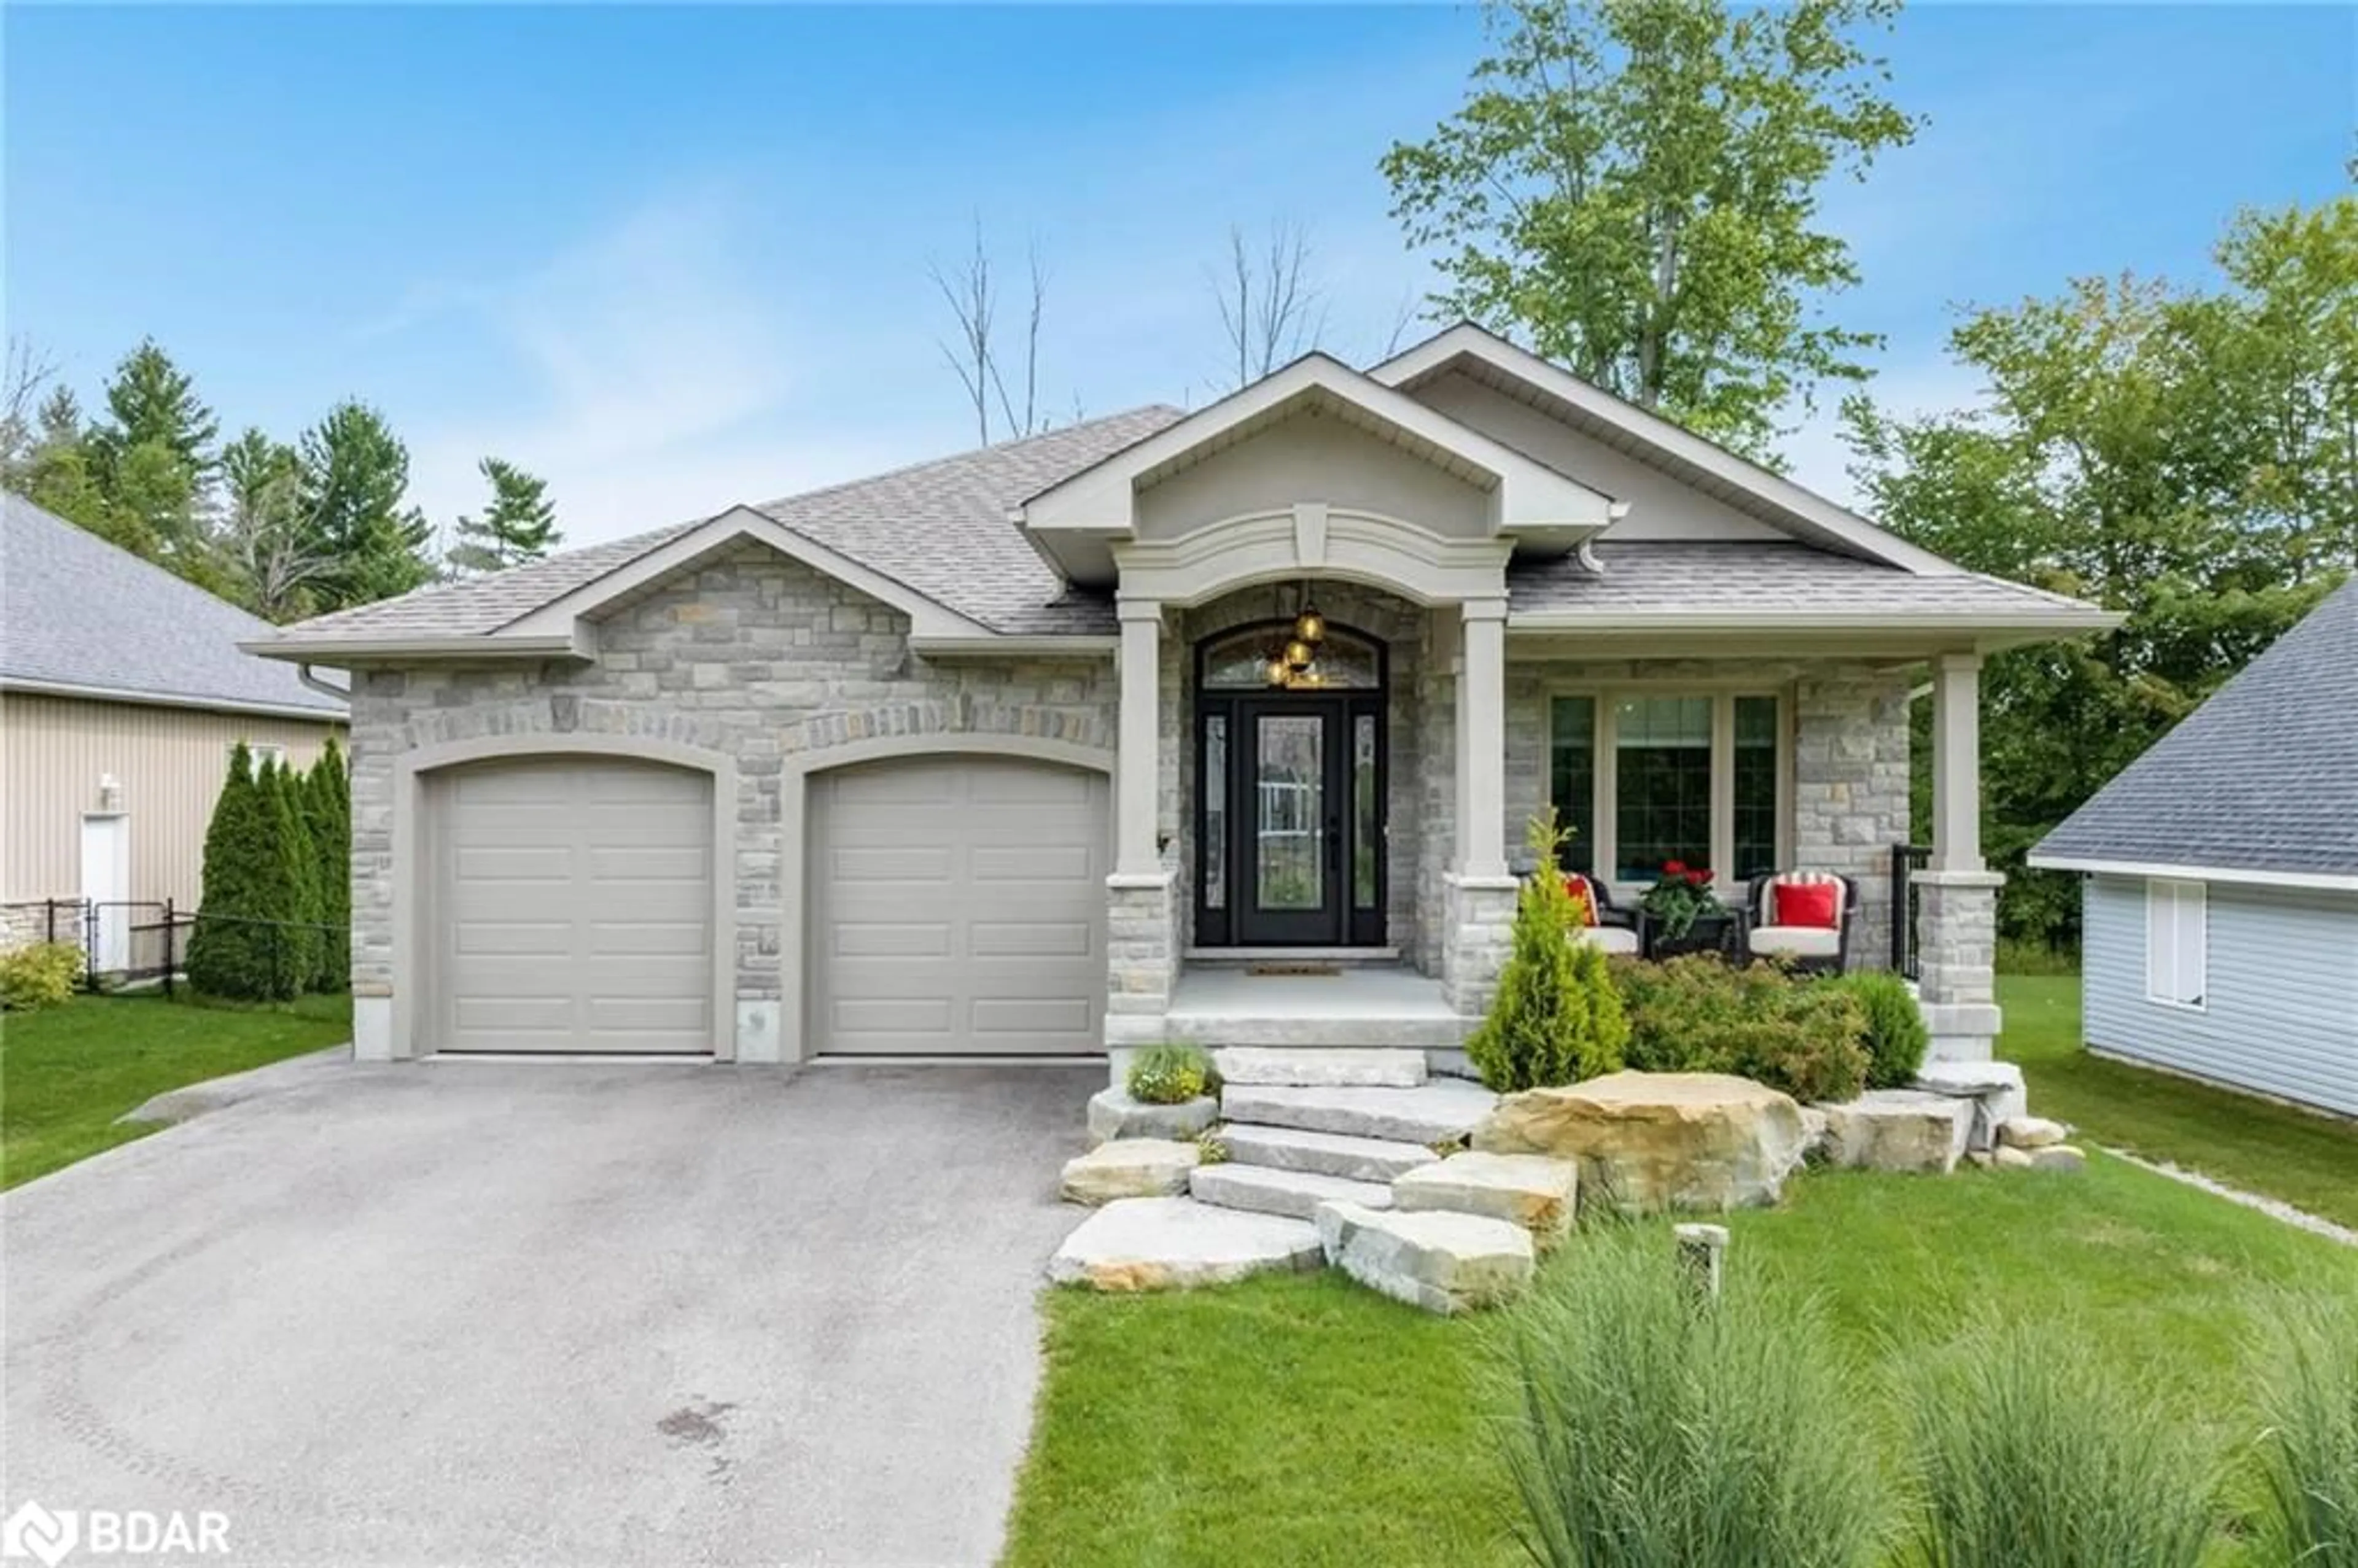 Home with brick exterior material for 9 Sunnyside Ave, Oro-Medonte Ontario L0L 2E0